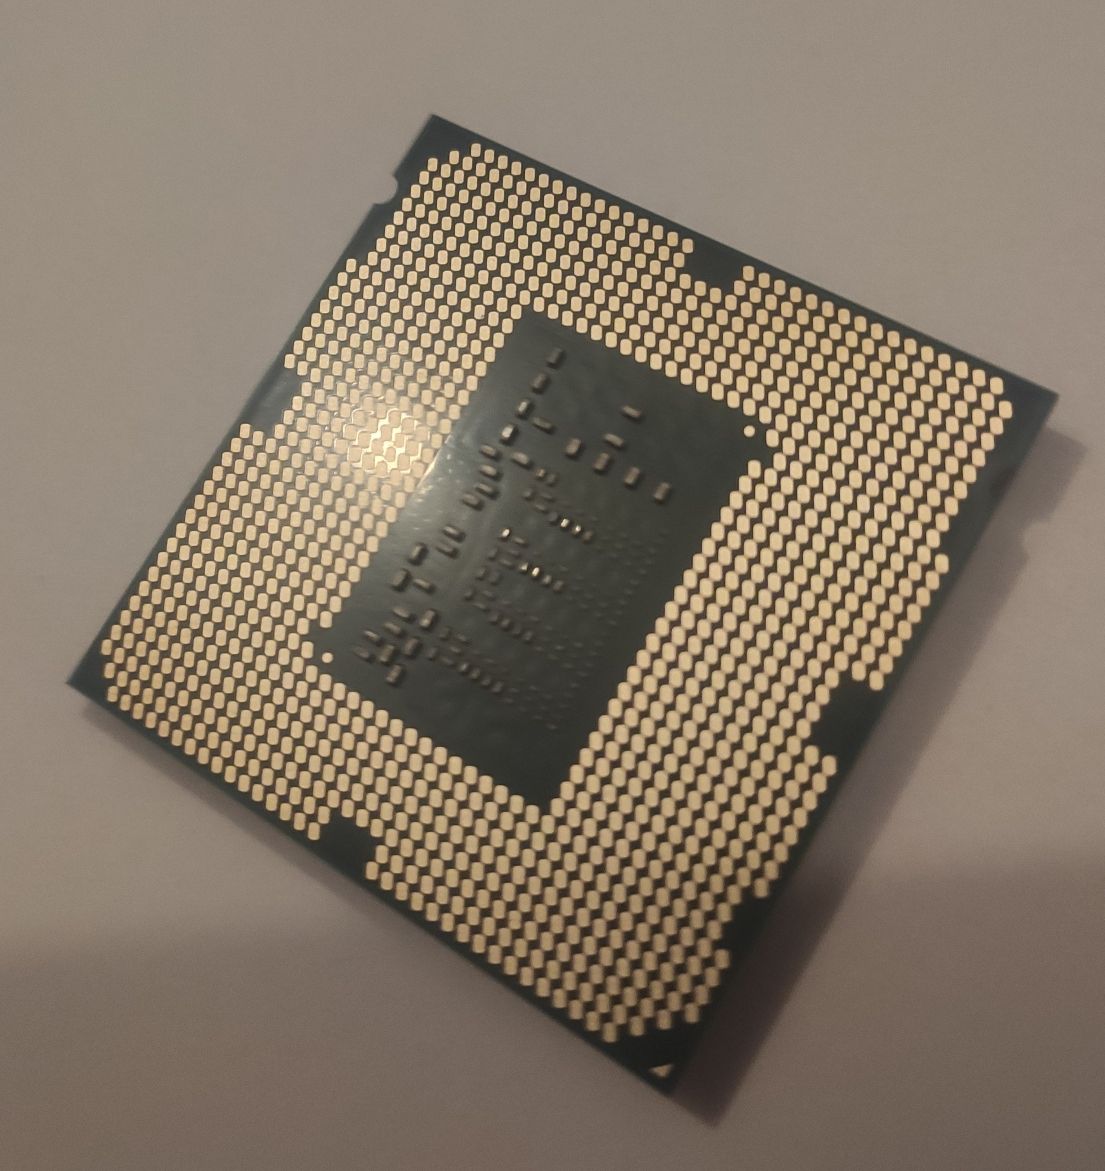 Procesor Intel Core i5 4460